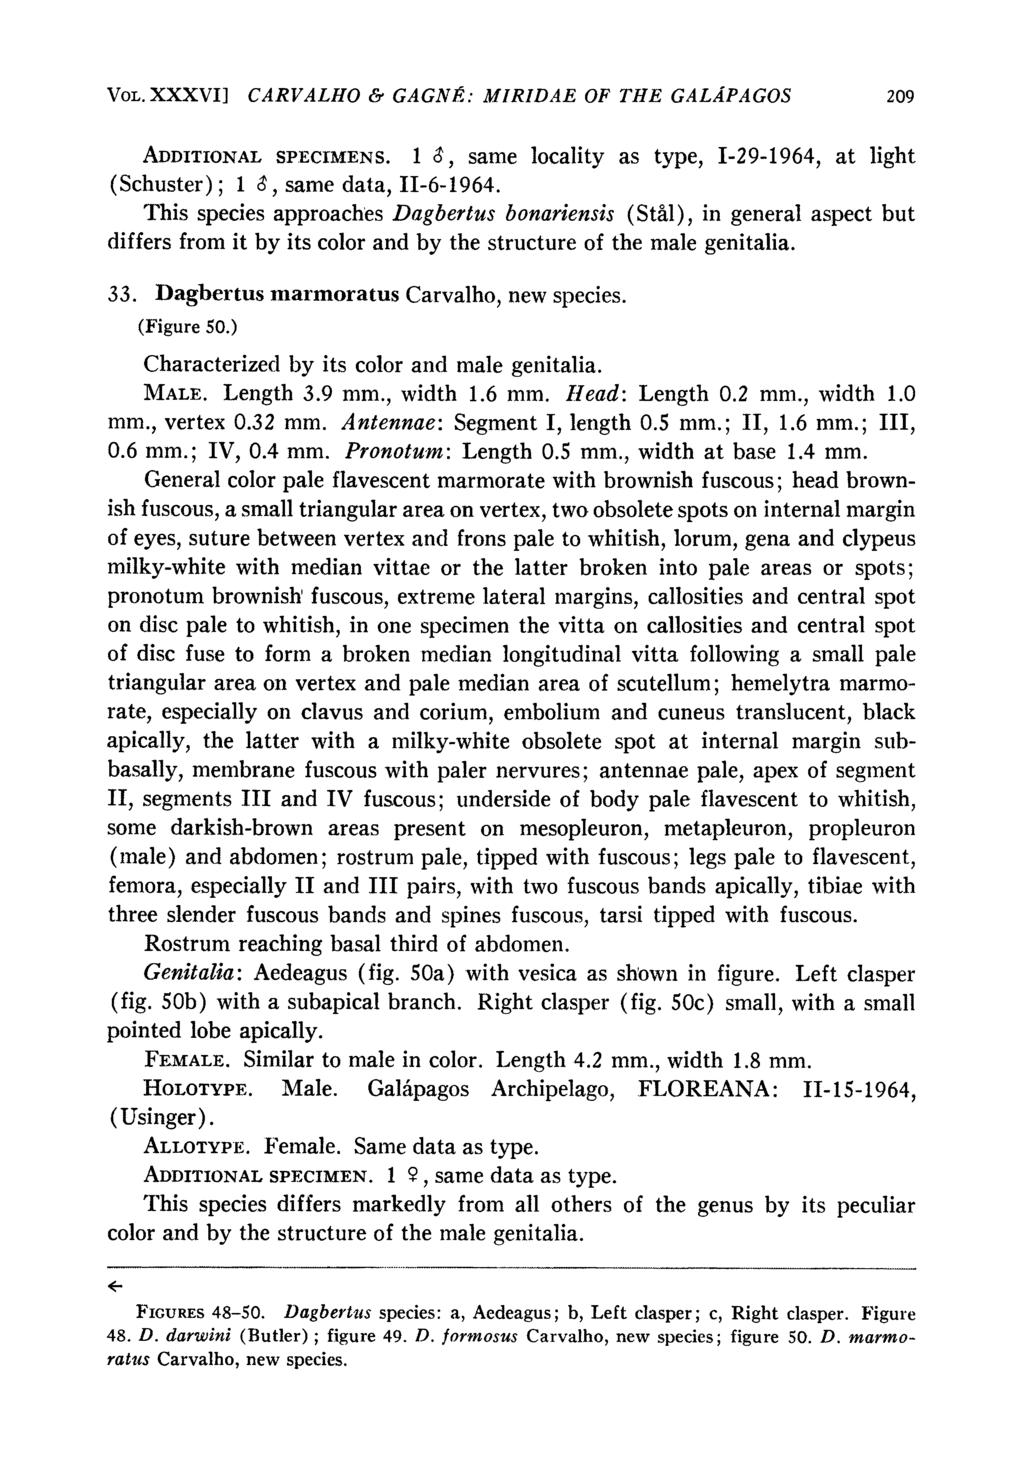 VOL. XXXVI] CARVALHO & GAGNI: MIRIDAE OF THE GALAPAGOS 209 ADDITIONAL SPECIMENS. 1 &, same locality as type, I-29-1964, at light (Schuster); 1 8, same data, 11-6-1964.